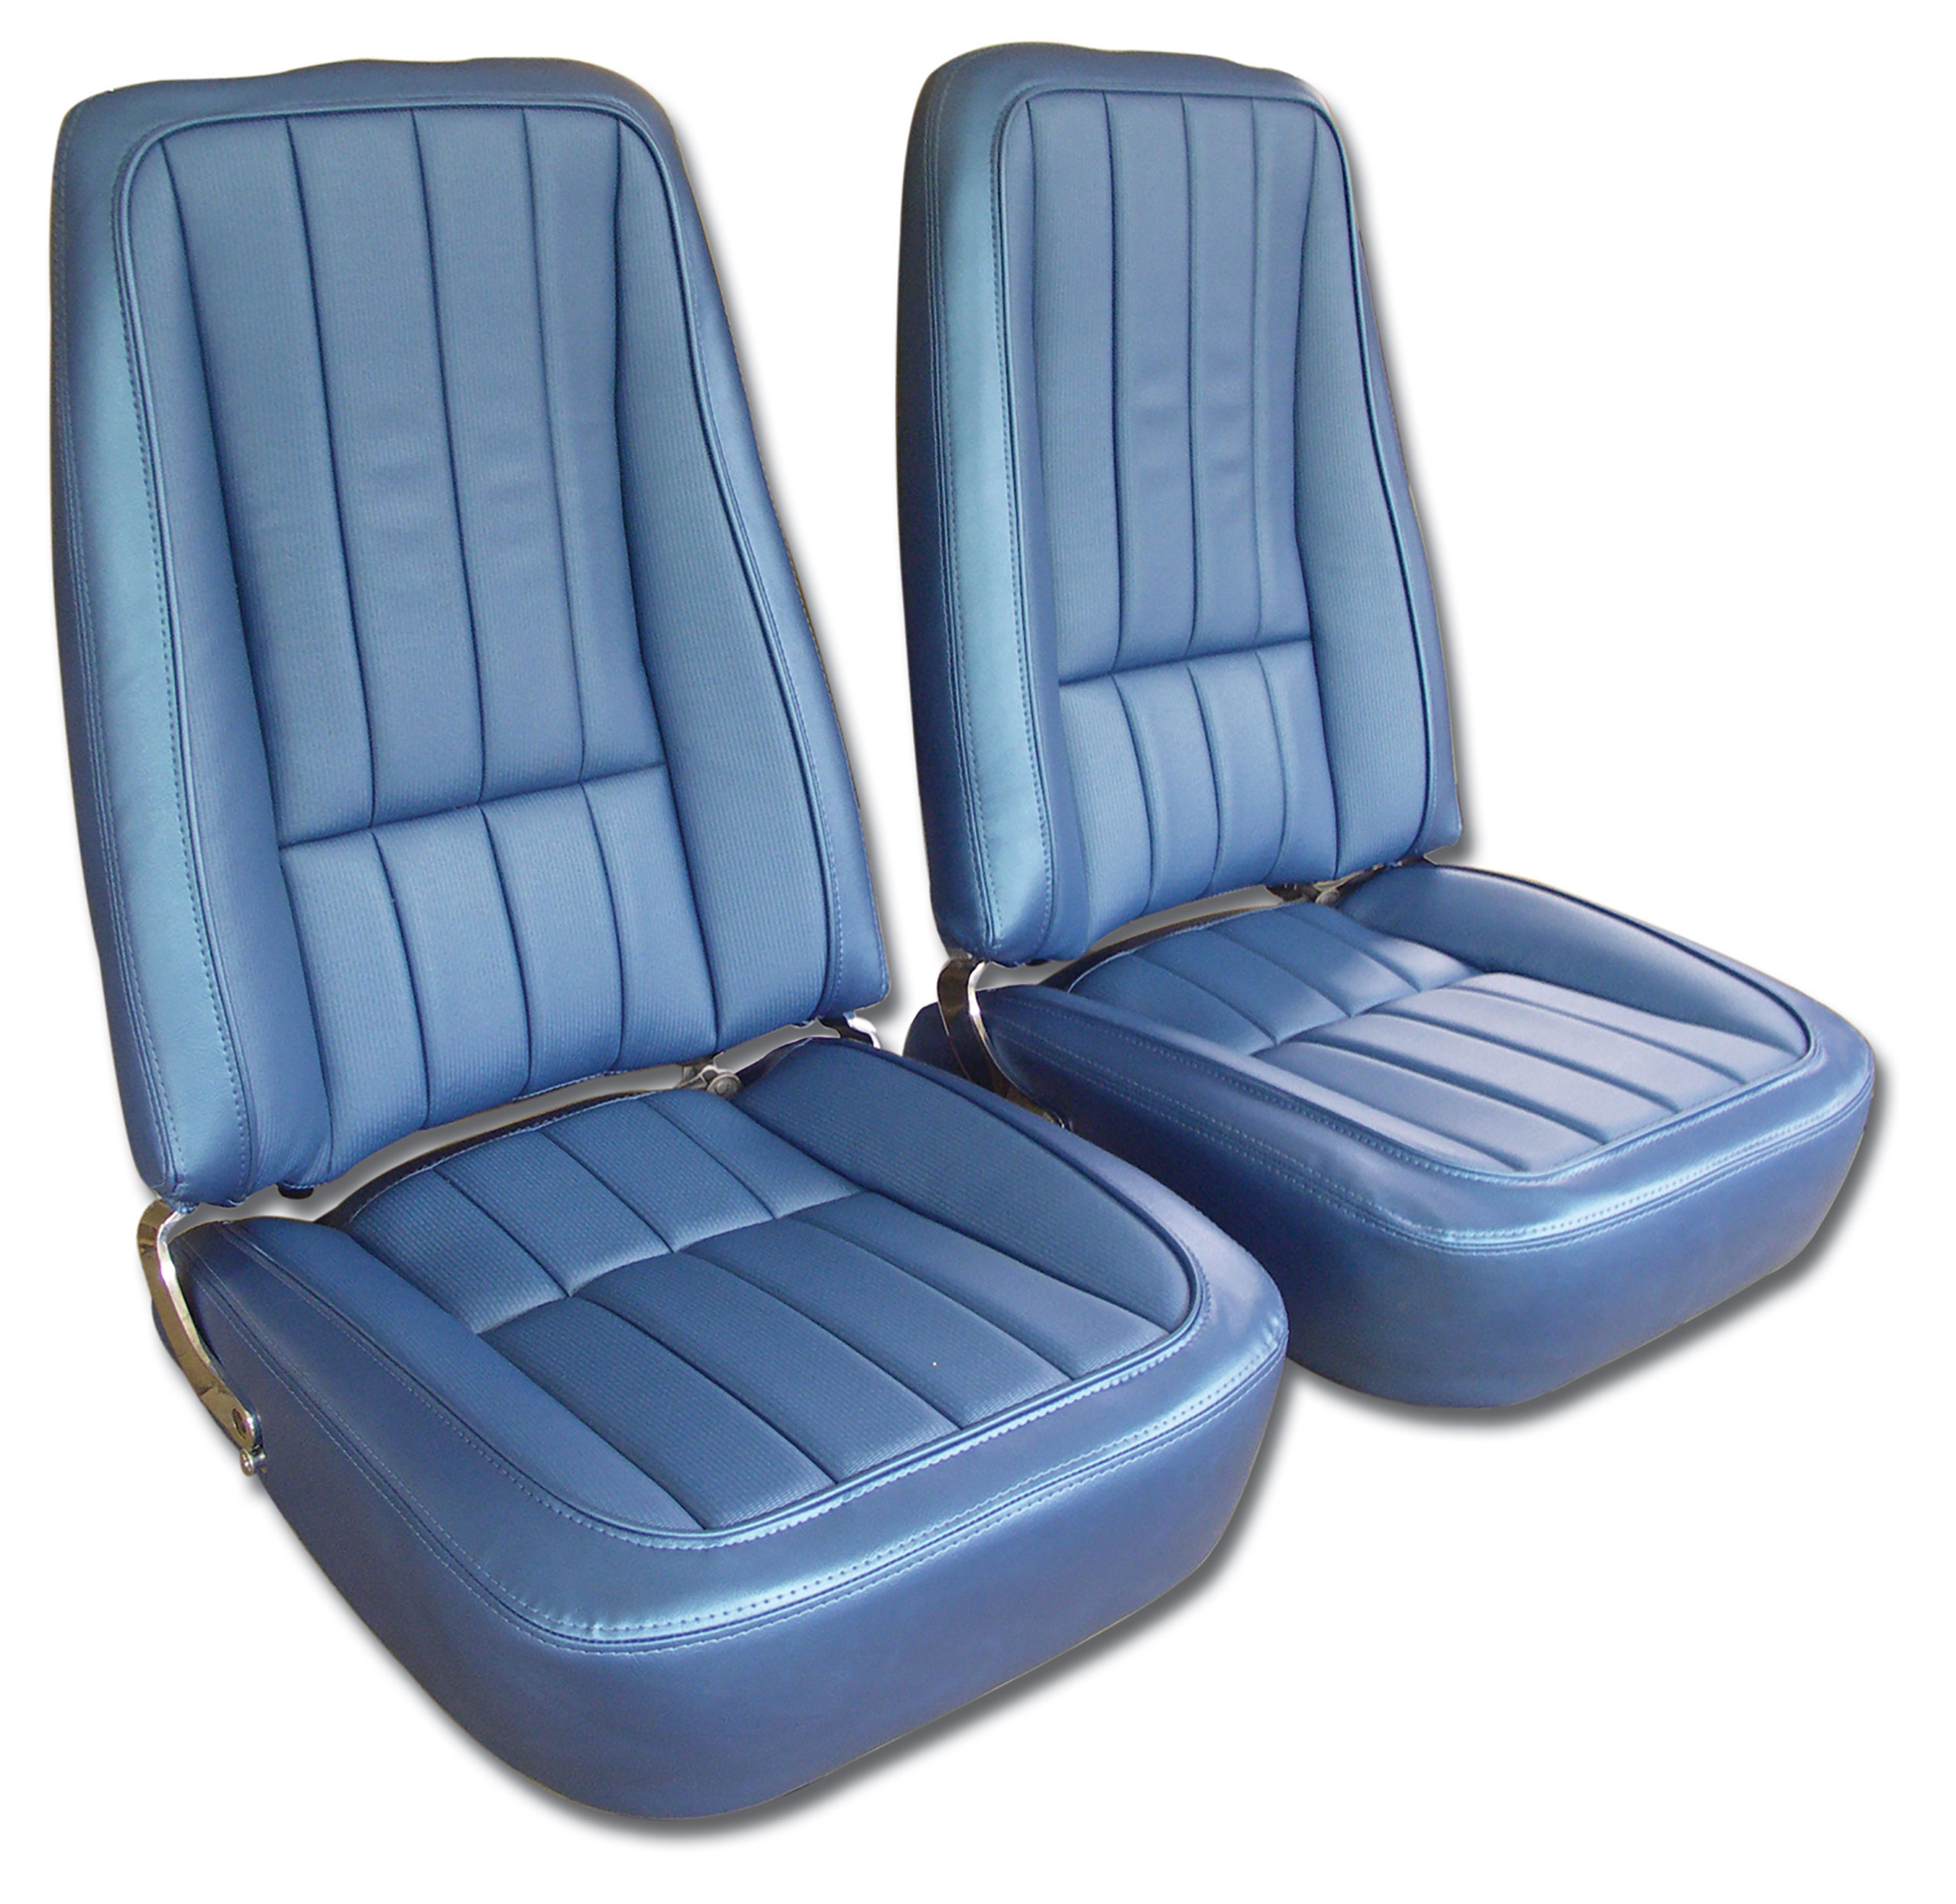 1969 C3 Corvette Mounted Seats Bright Blue "Leather-Like" Vinyl With Headrest Bracket